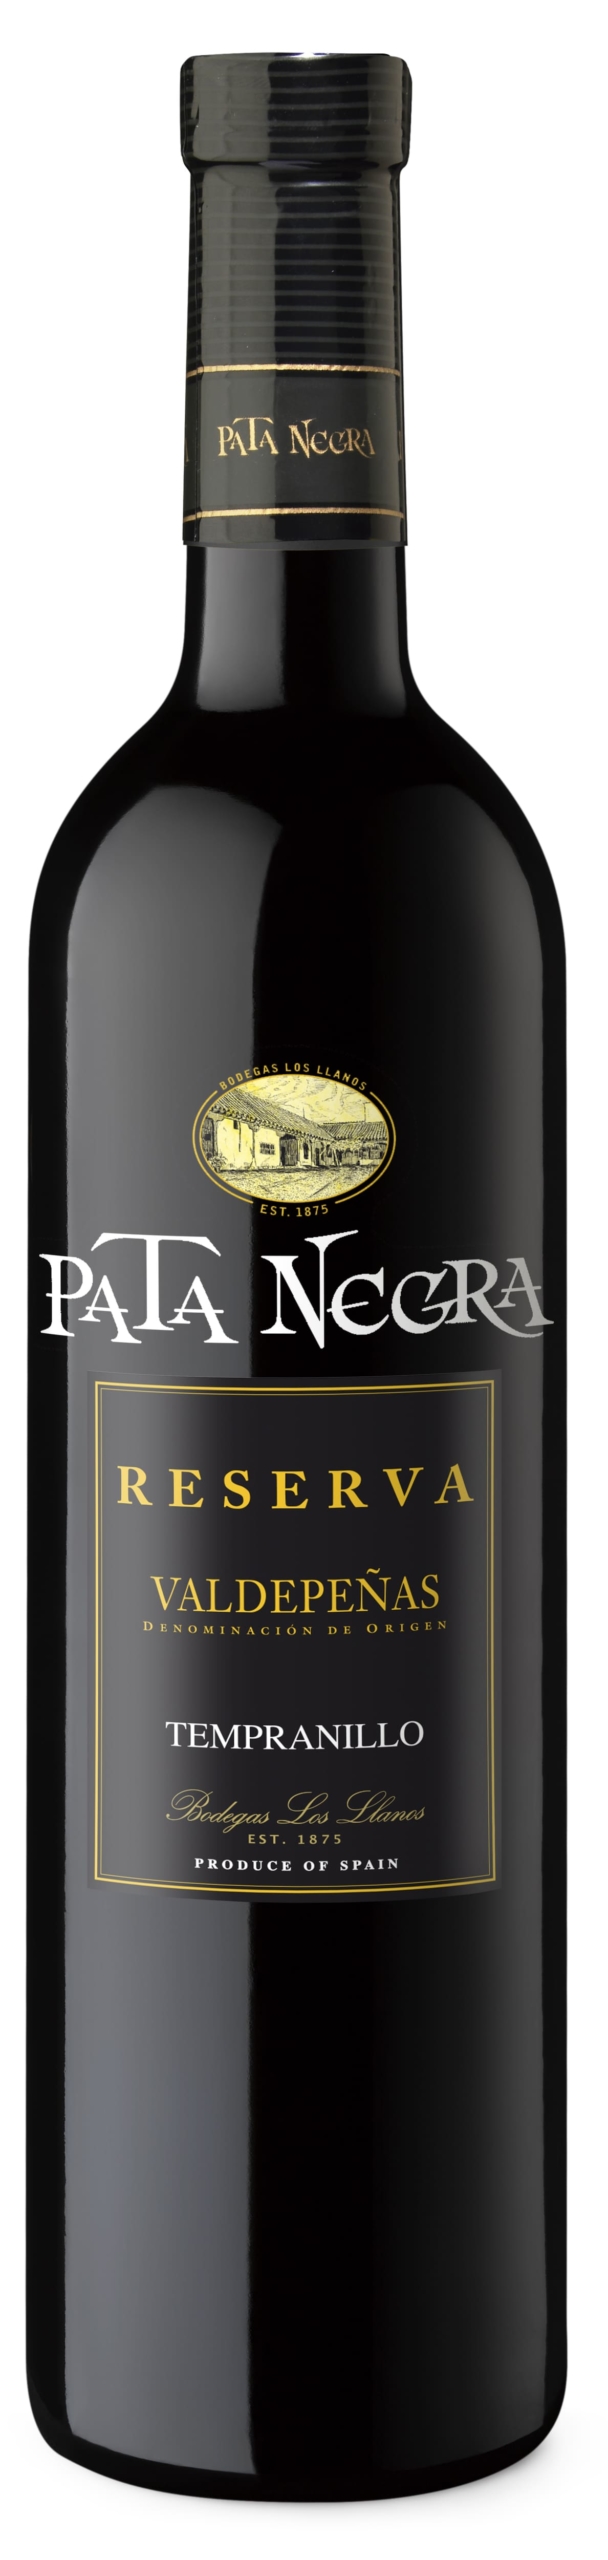 PATA NEGRA vino tinto reserva D.O. Valdepeñas - Your Spanish Corner